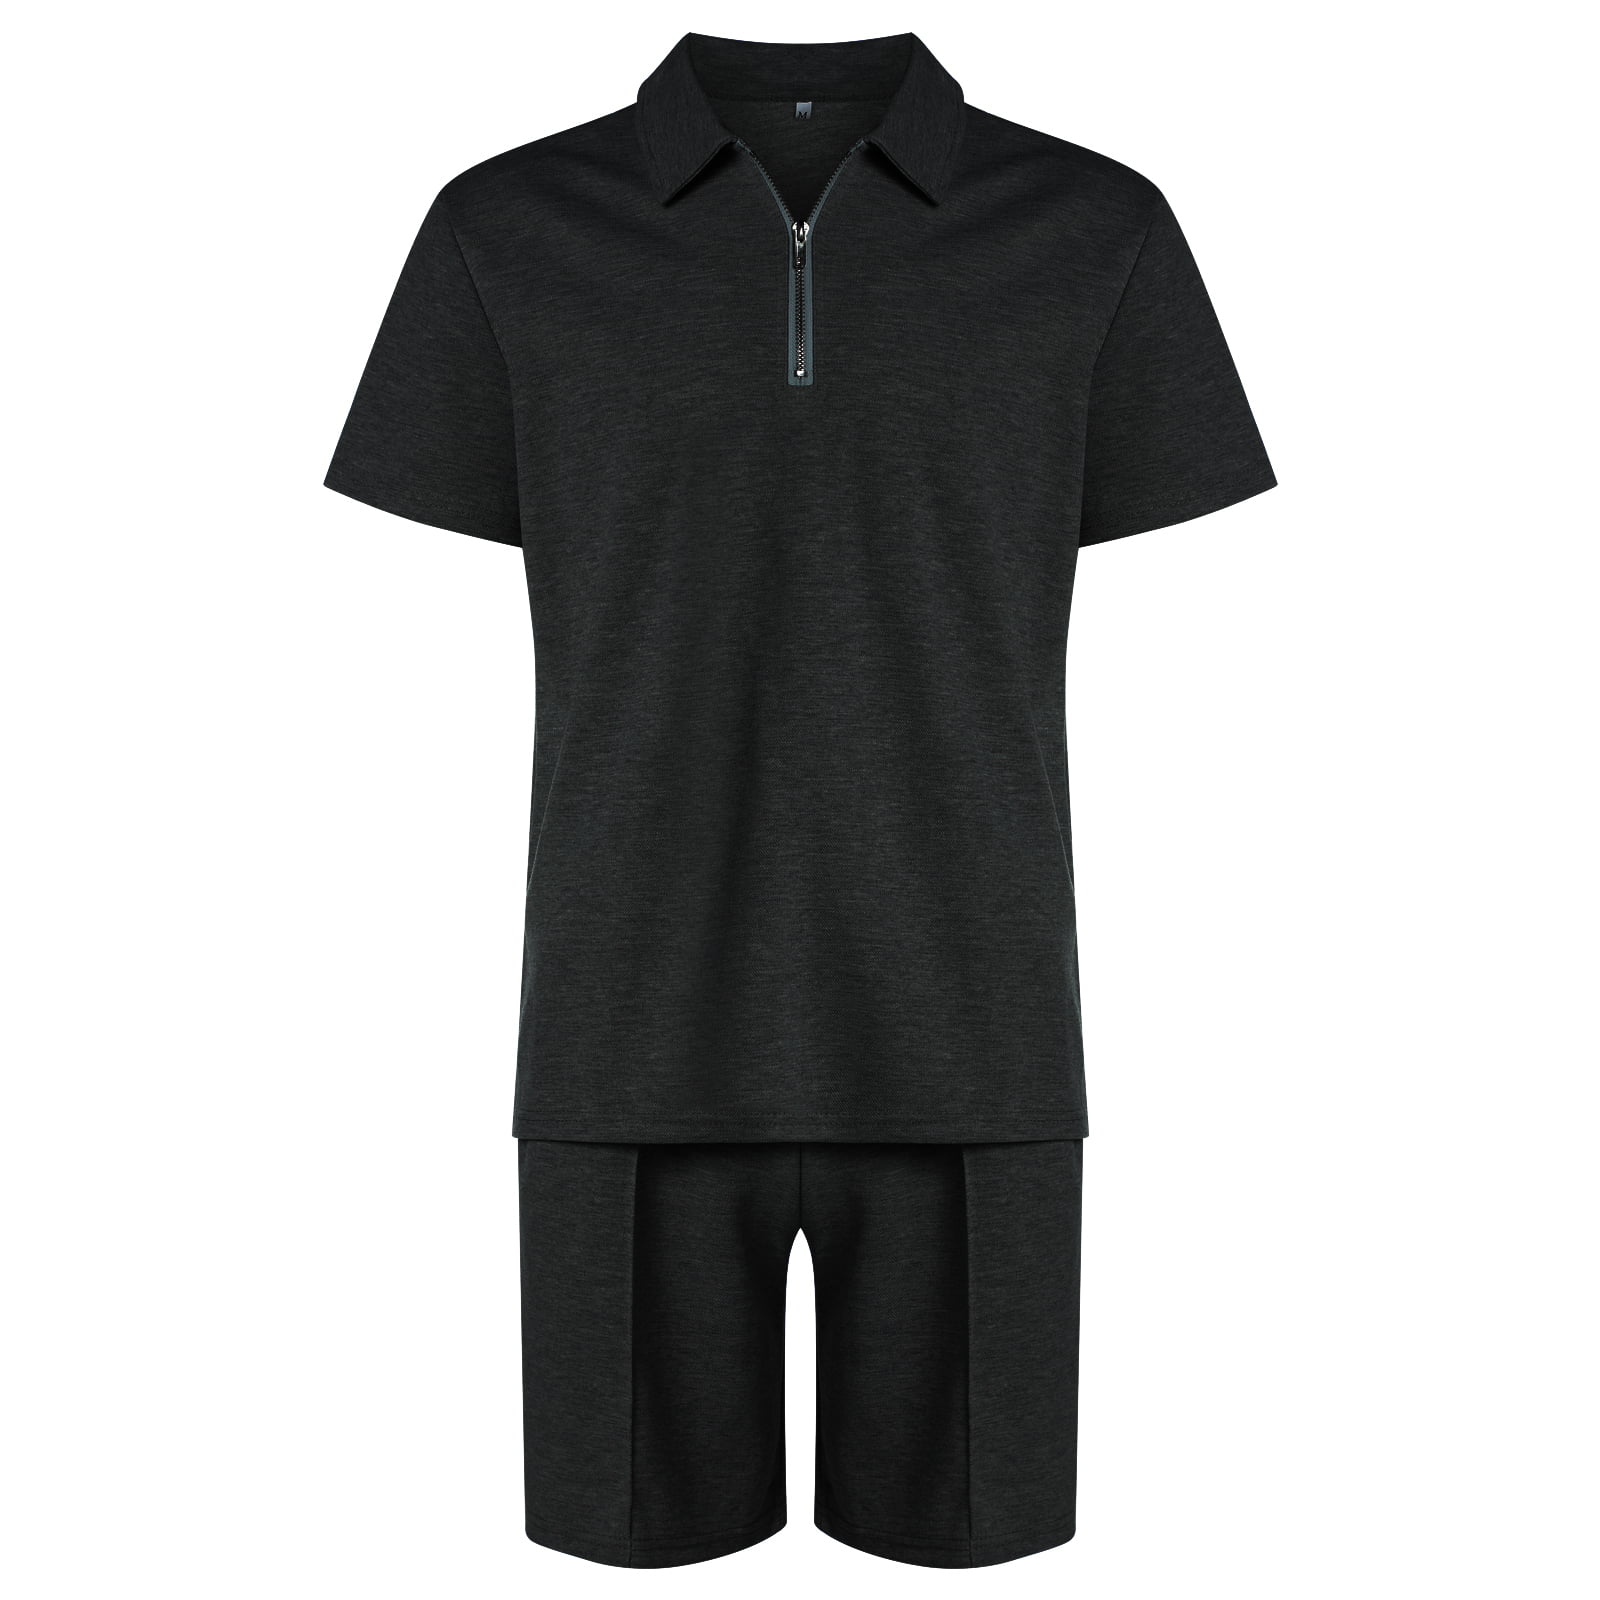 Stylish Men's Slim Fit POLO Shirts Short Sleeve Casual Plain T-shirt Tees Tops 